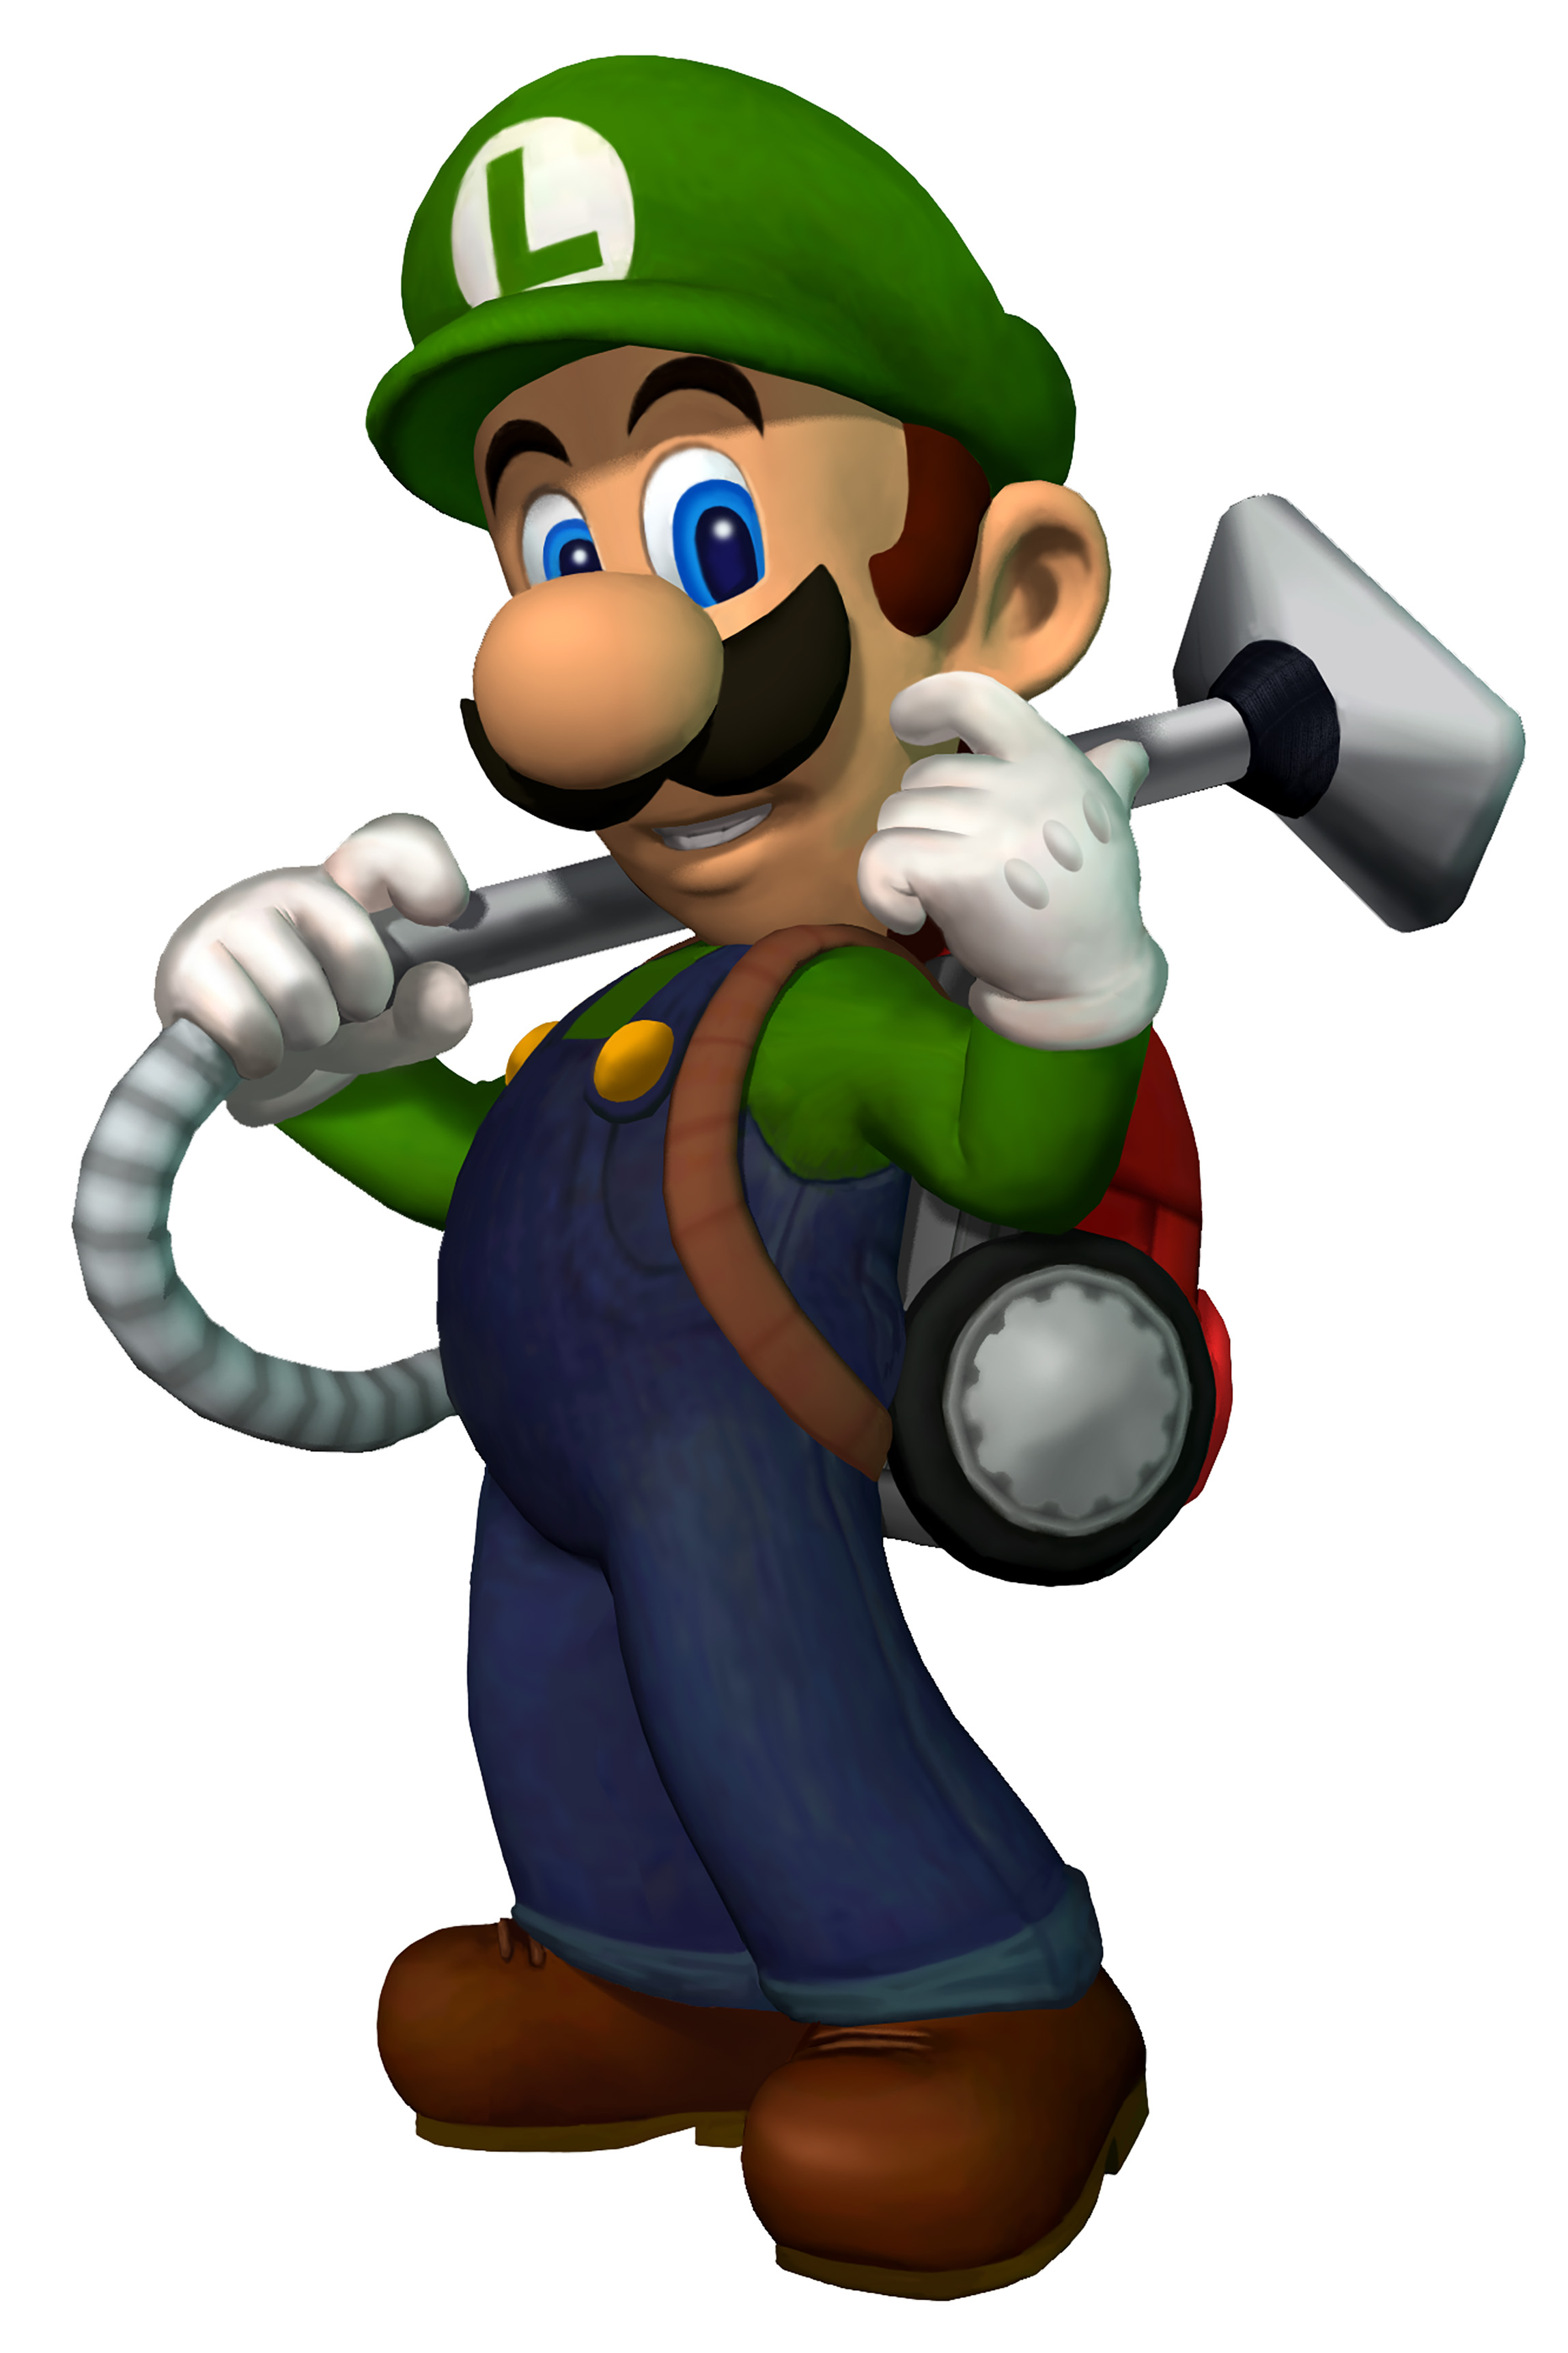 Luigi's Mansion art - Nintendo Everything